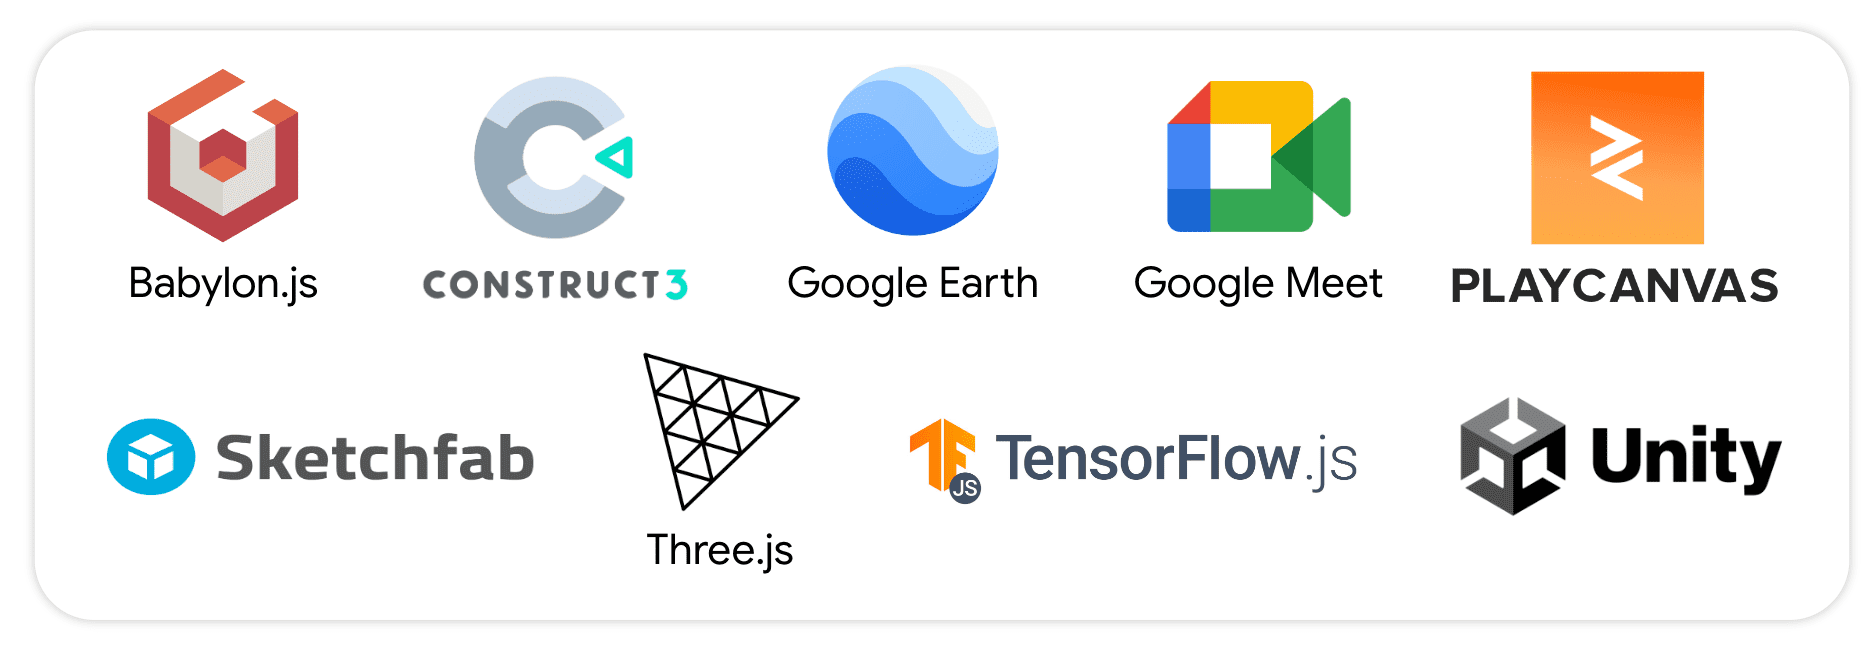 Babylon.js, Construct 3, Google Earth, Google Meet, PlayCanvas, Sketchfab, Three.JS, TensorFlow.js et Unity.